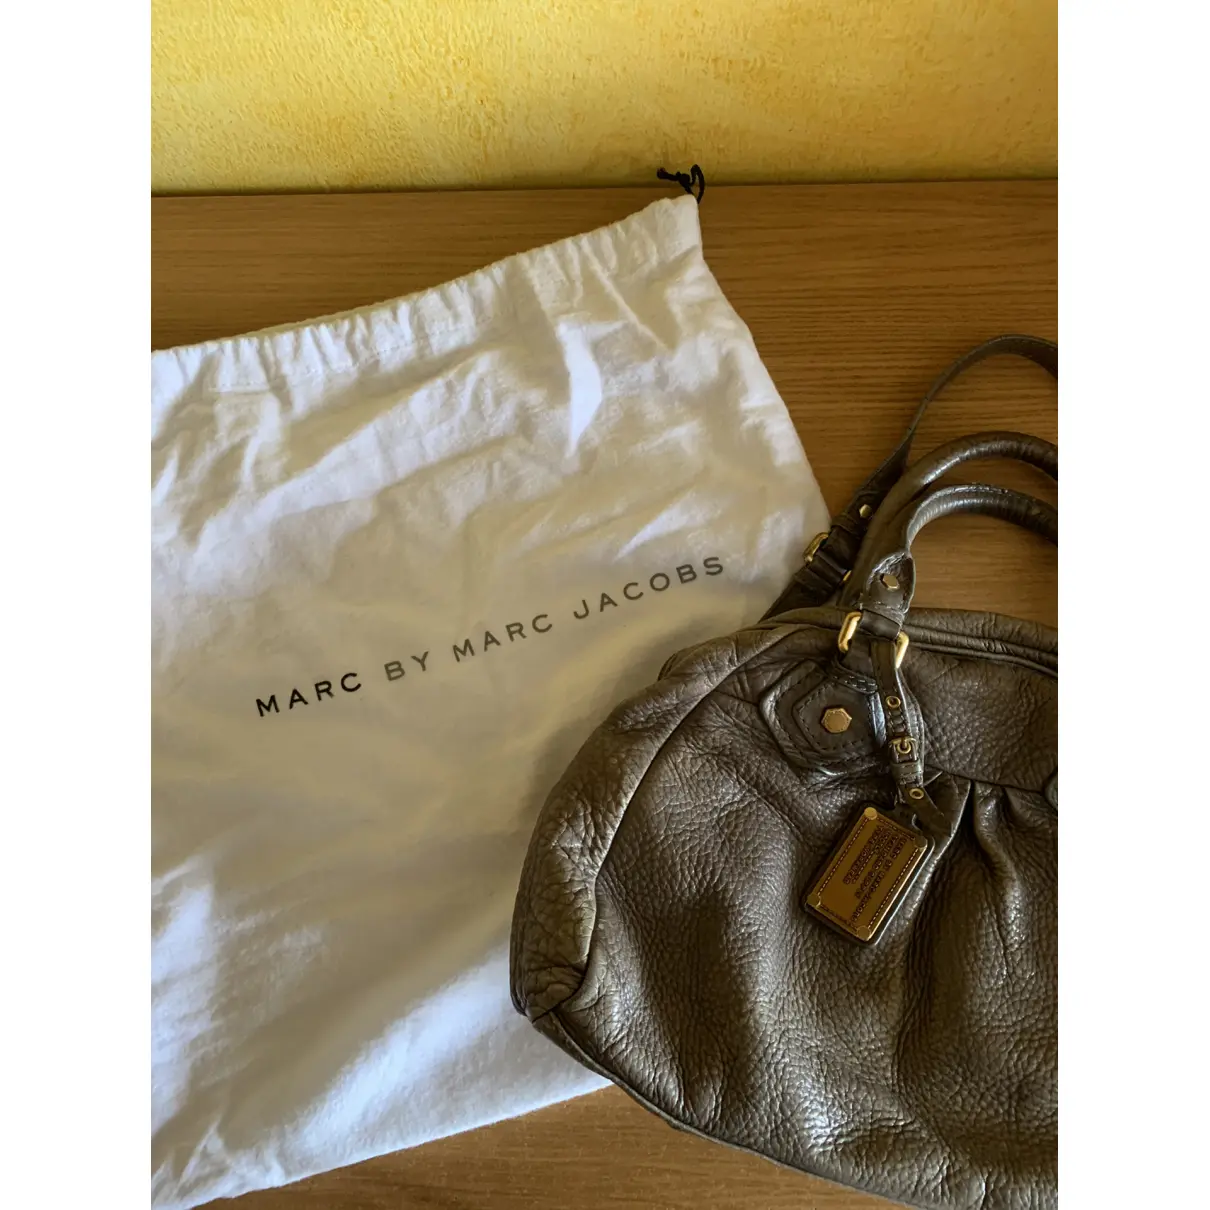 Buy Marc by Marc Jacobs Classic Q leather handbag online - Vintage